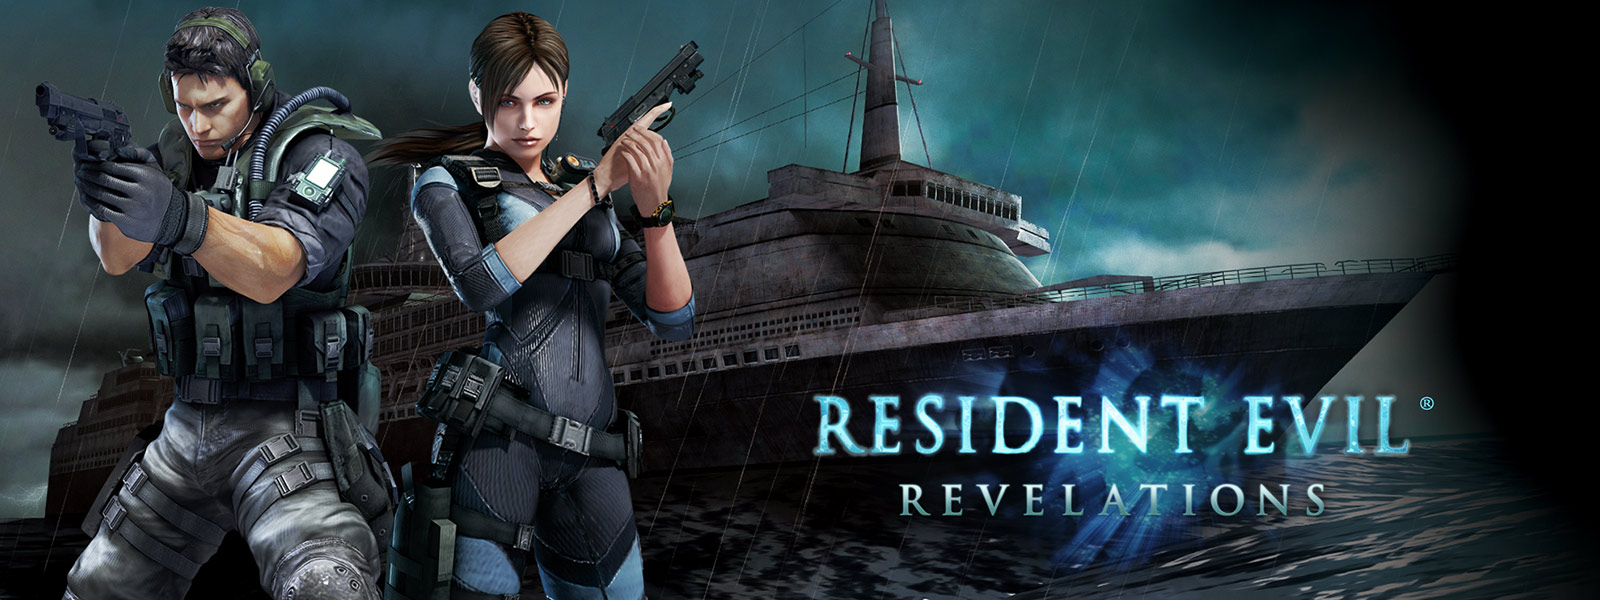 Resident Evil Revelations, 유령선처럼 보이는 선박 앞에 총을 들고 있는 두 명의 캐릭터